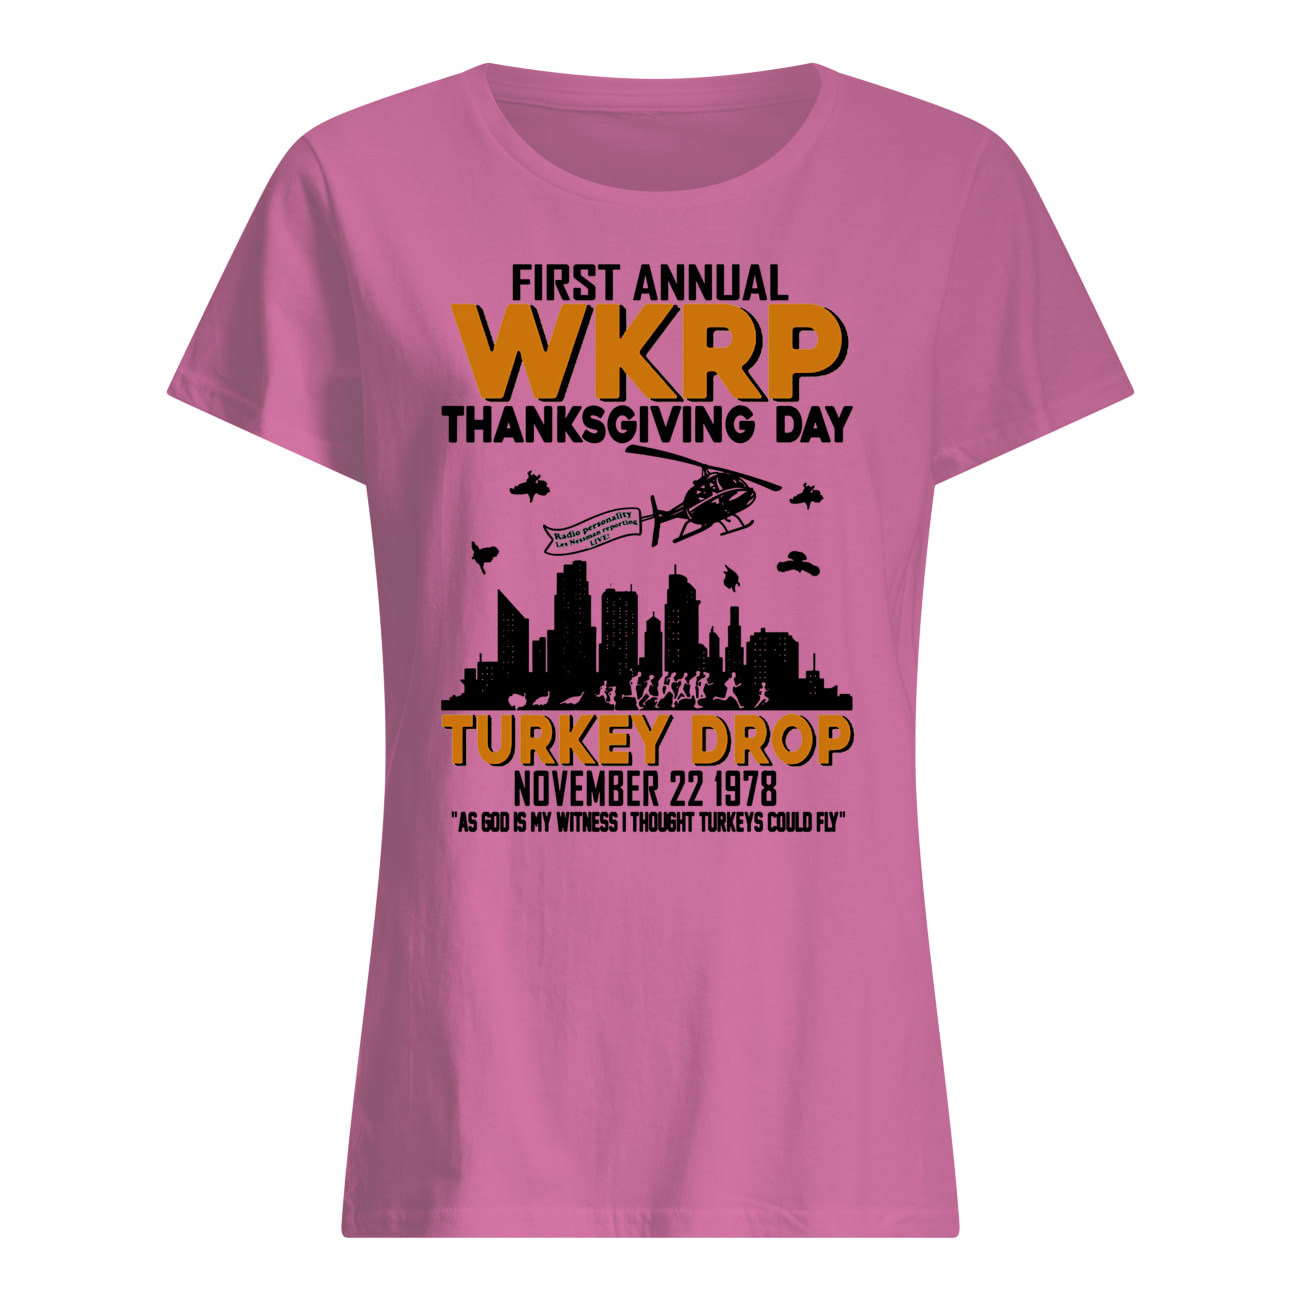 First annual wkrp thanksgiving day turkey drop november 22 1978 womens shirt